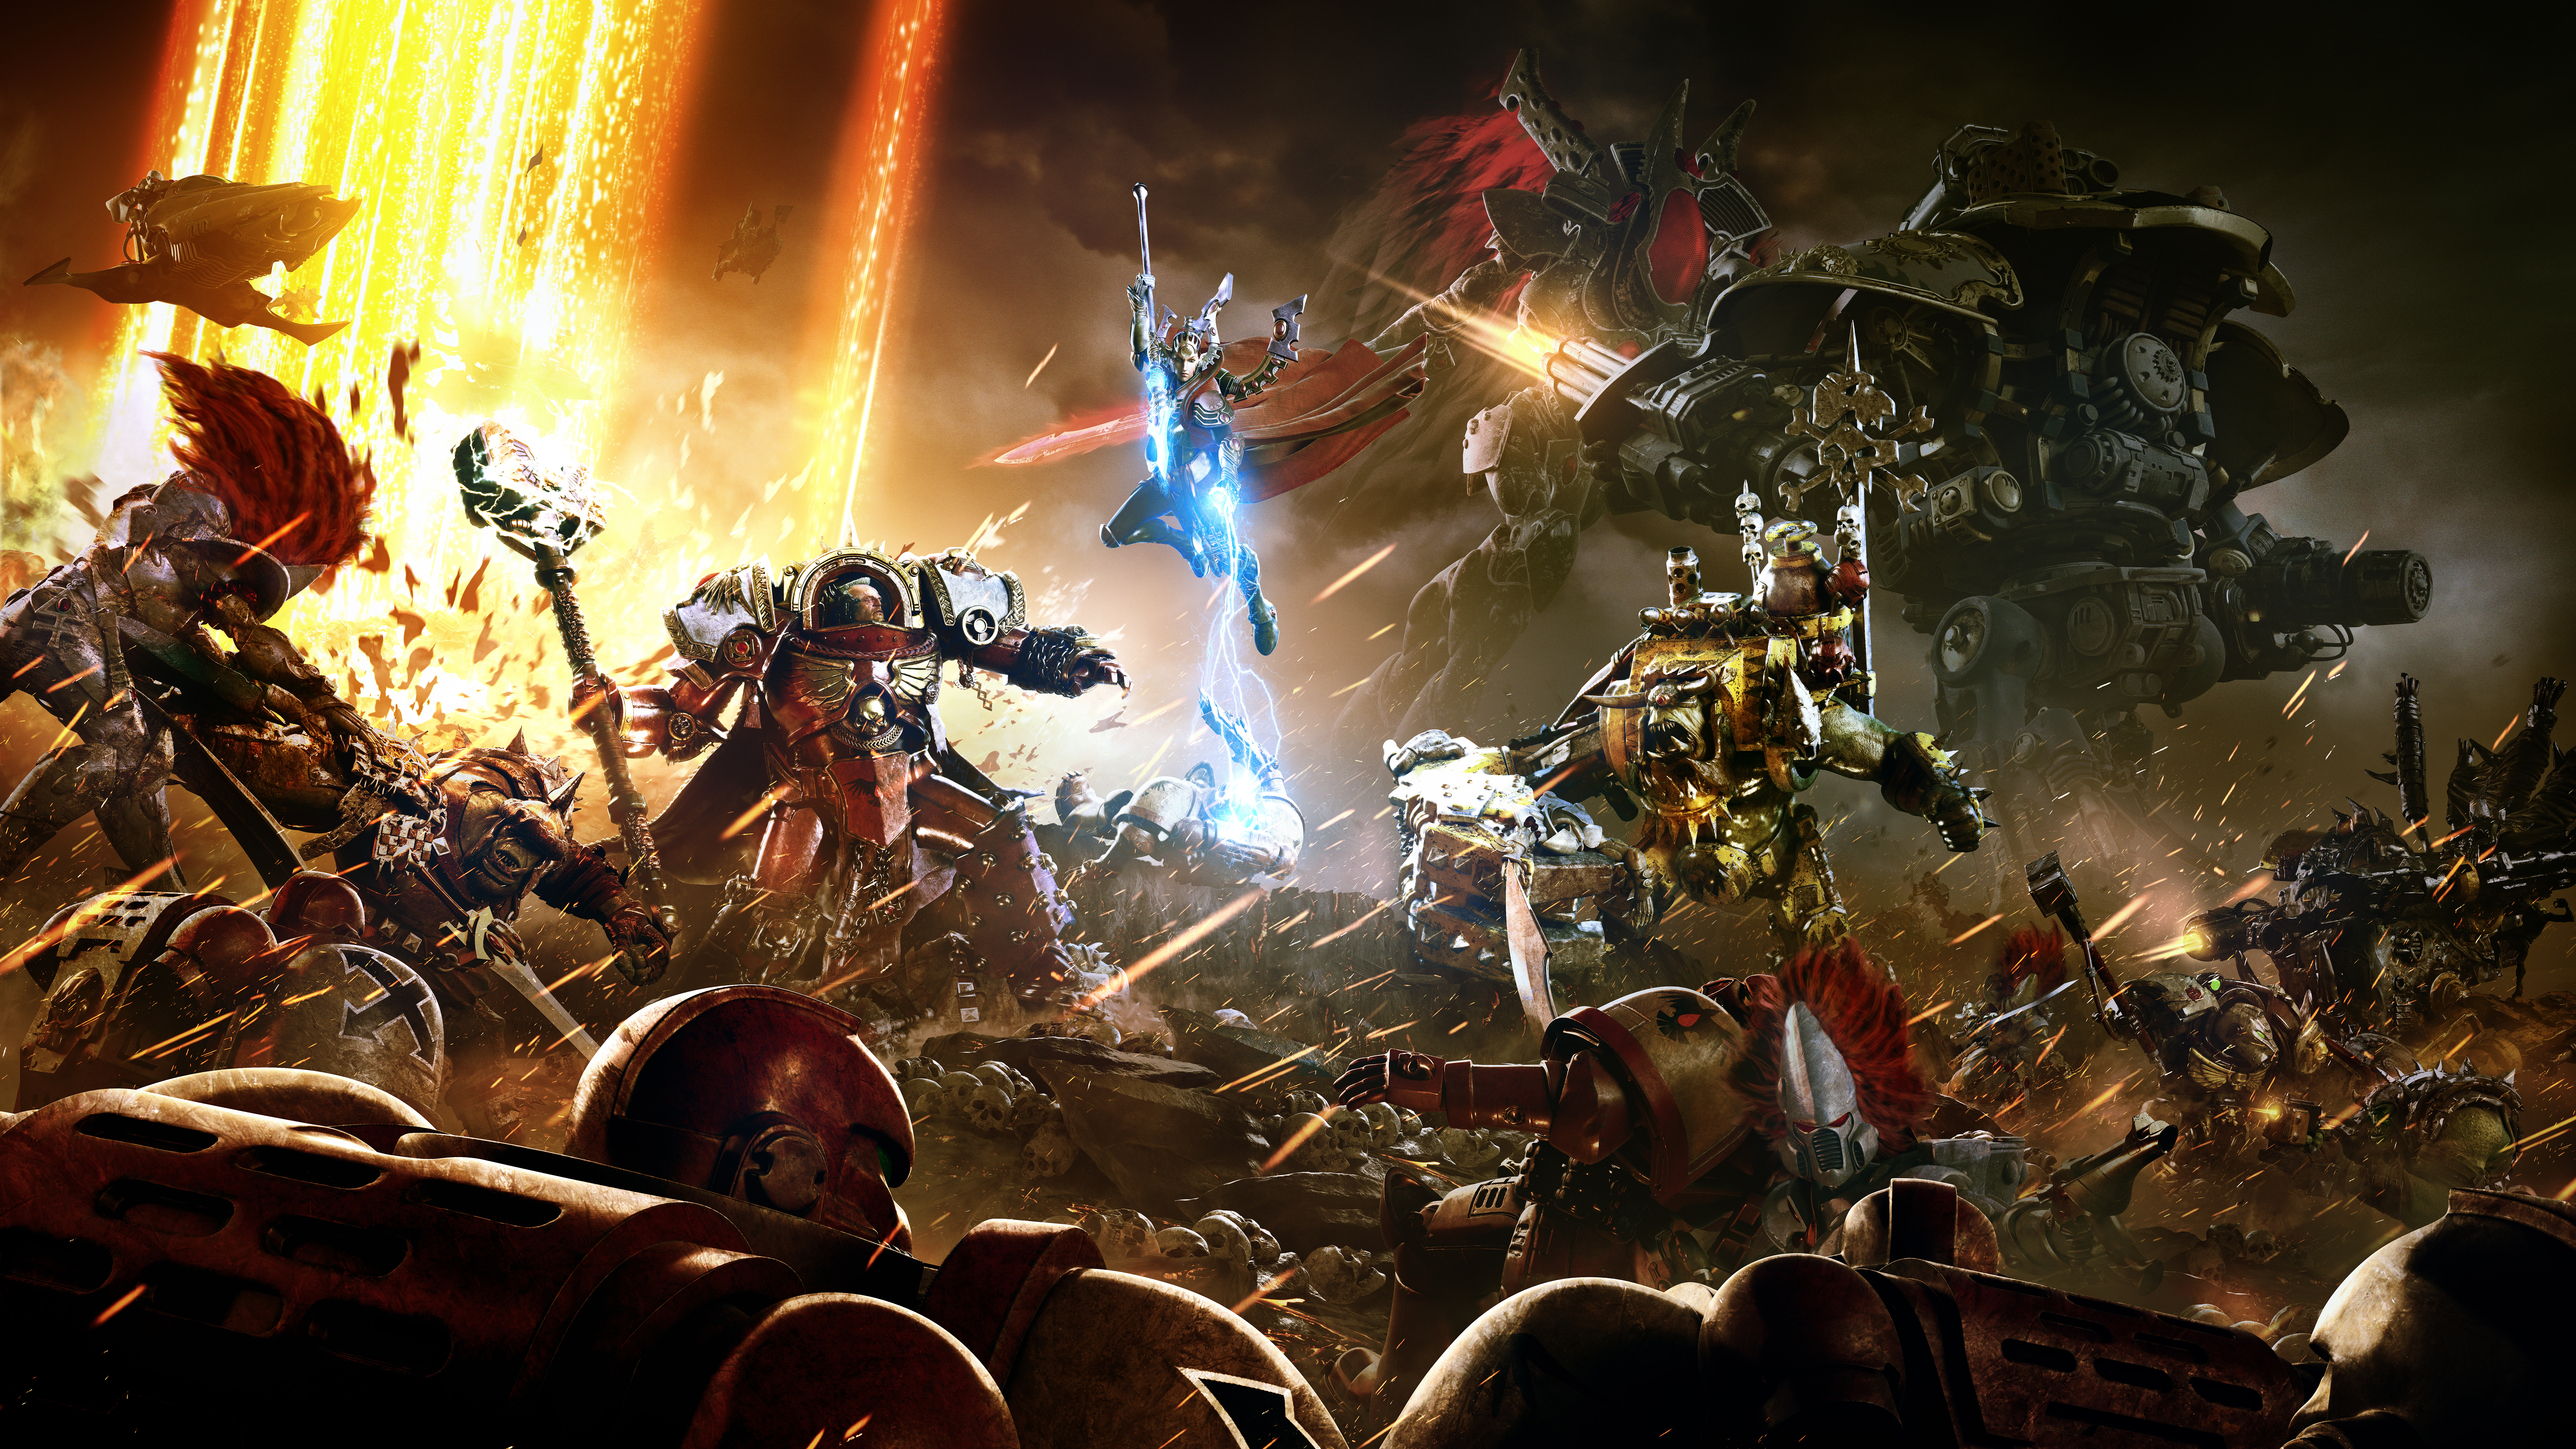 General 7680x4320 Warhammer 40,000 space marines Eldar orcs Terminator Astartes Adeptus Astartes CGI digital art Warhammer